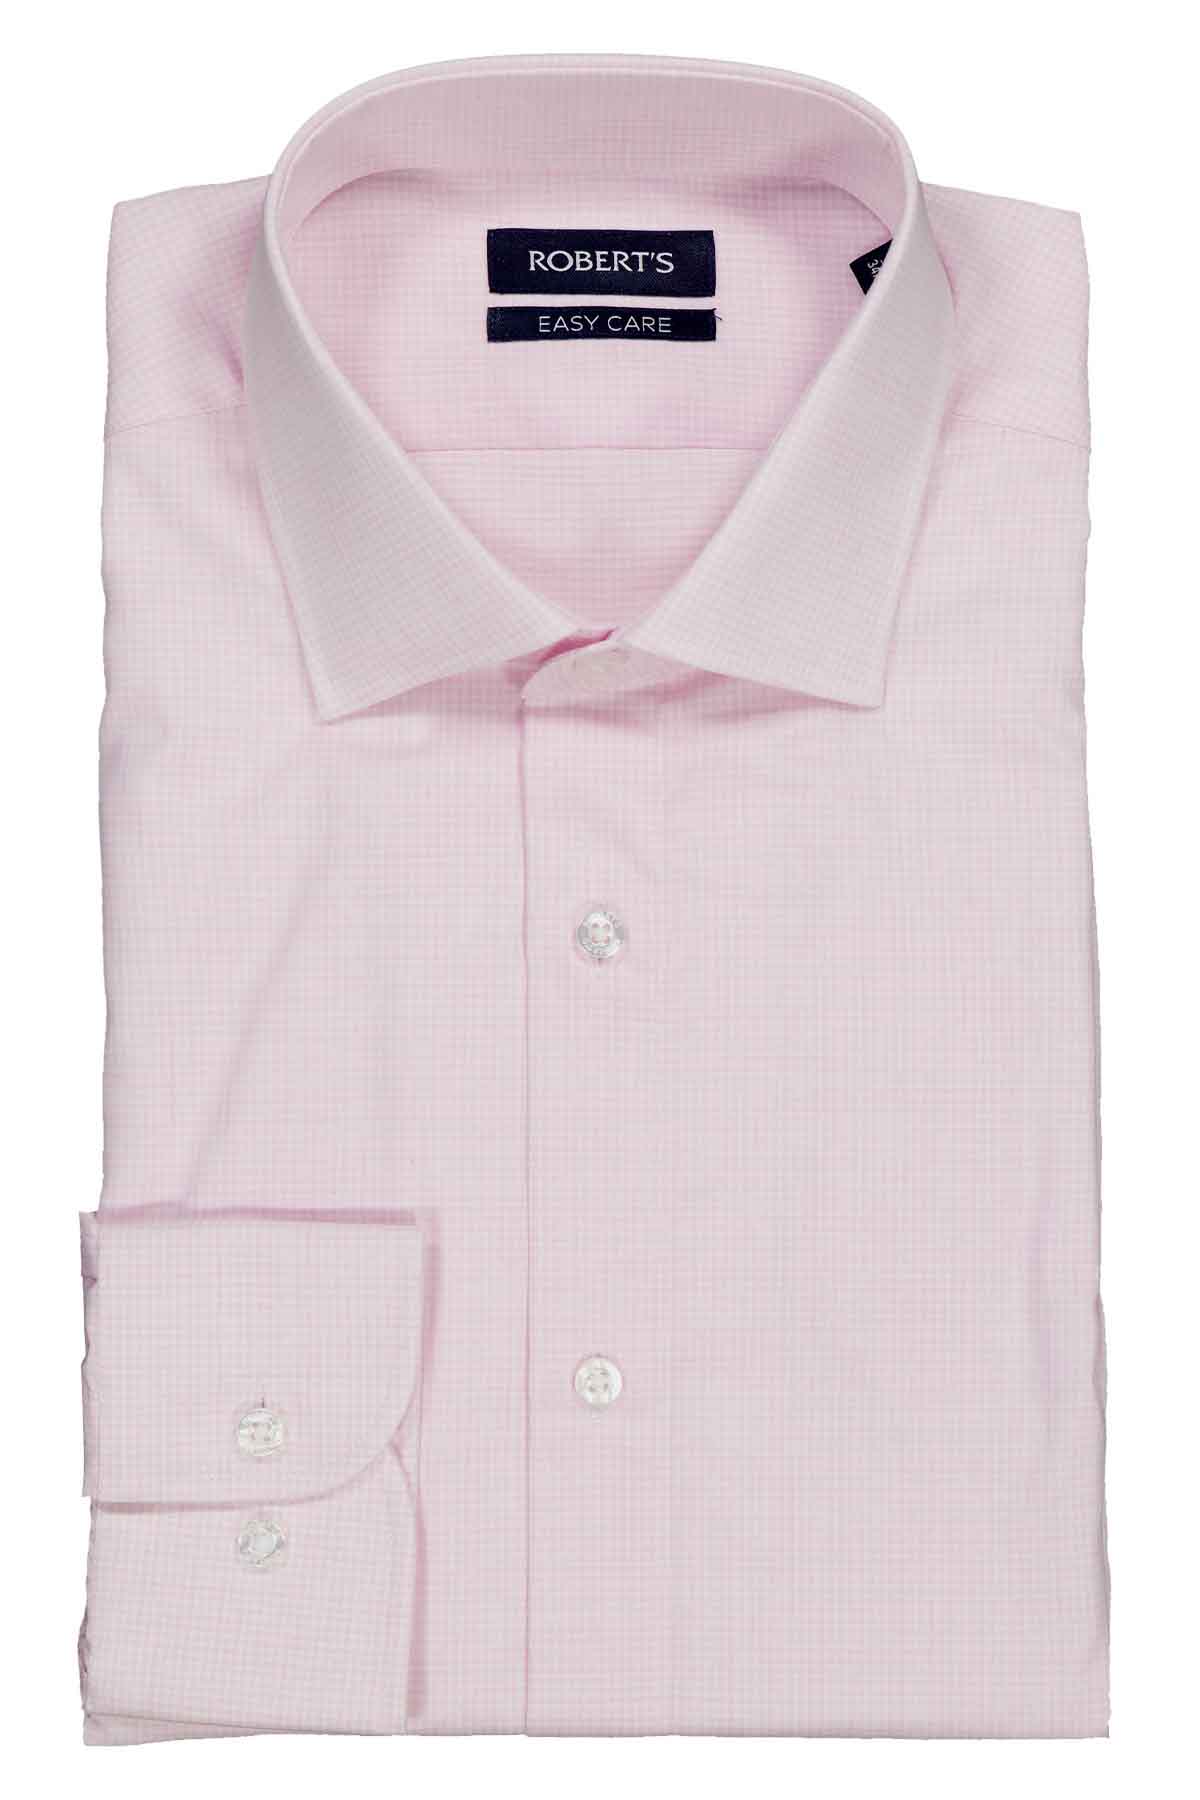 Camisa Roberts Easy Care Color Rosa Claro Slim Fit